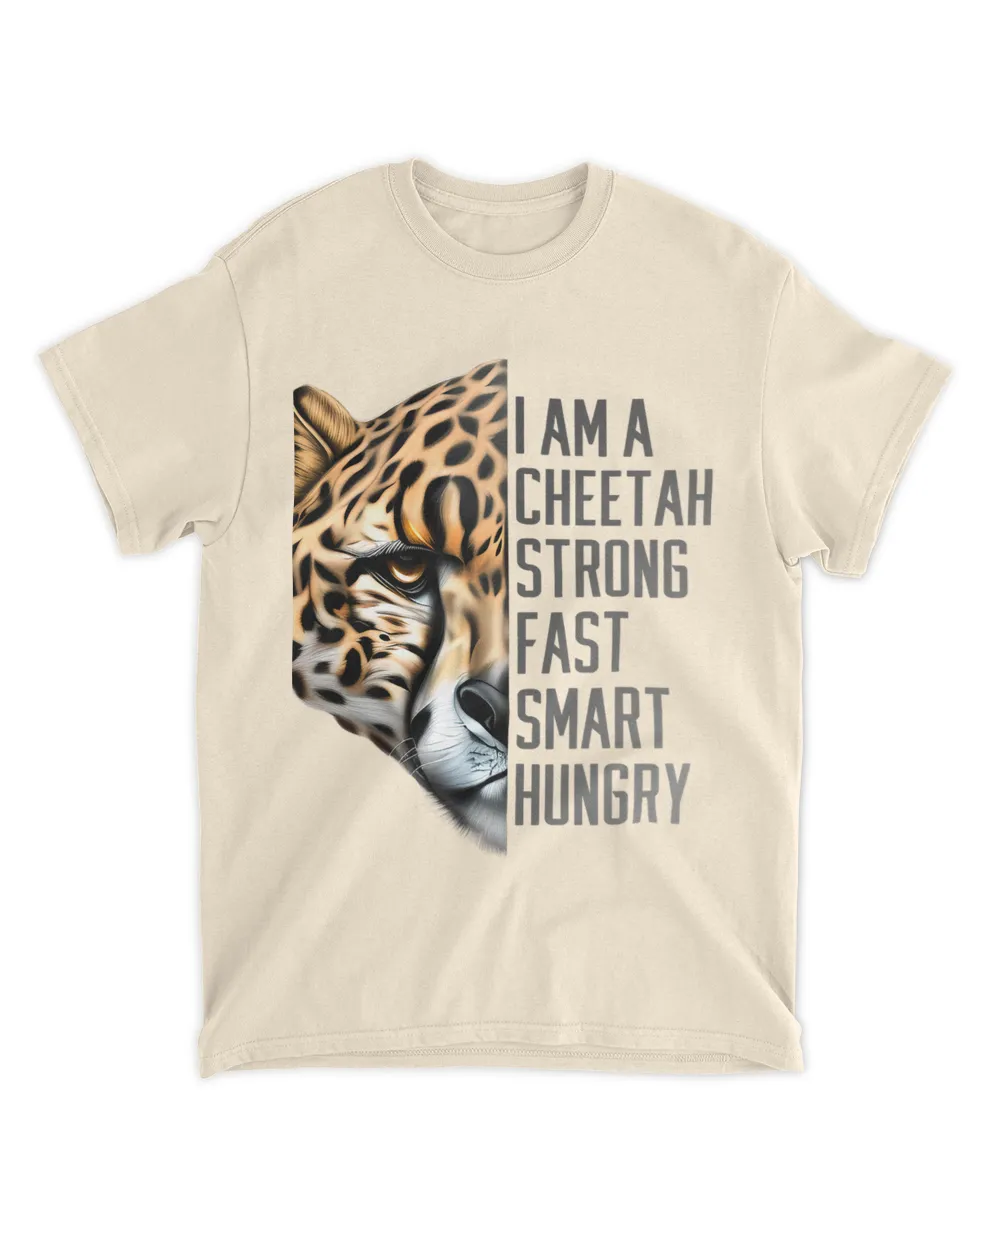 Cheetah Strong Cheetah